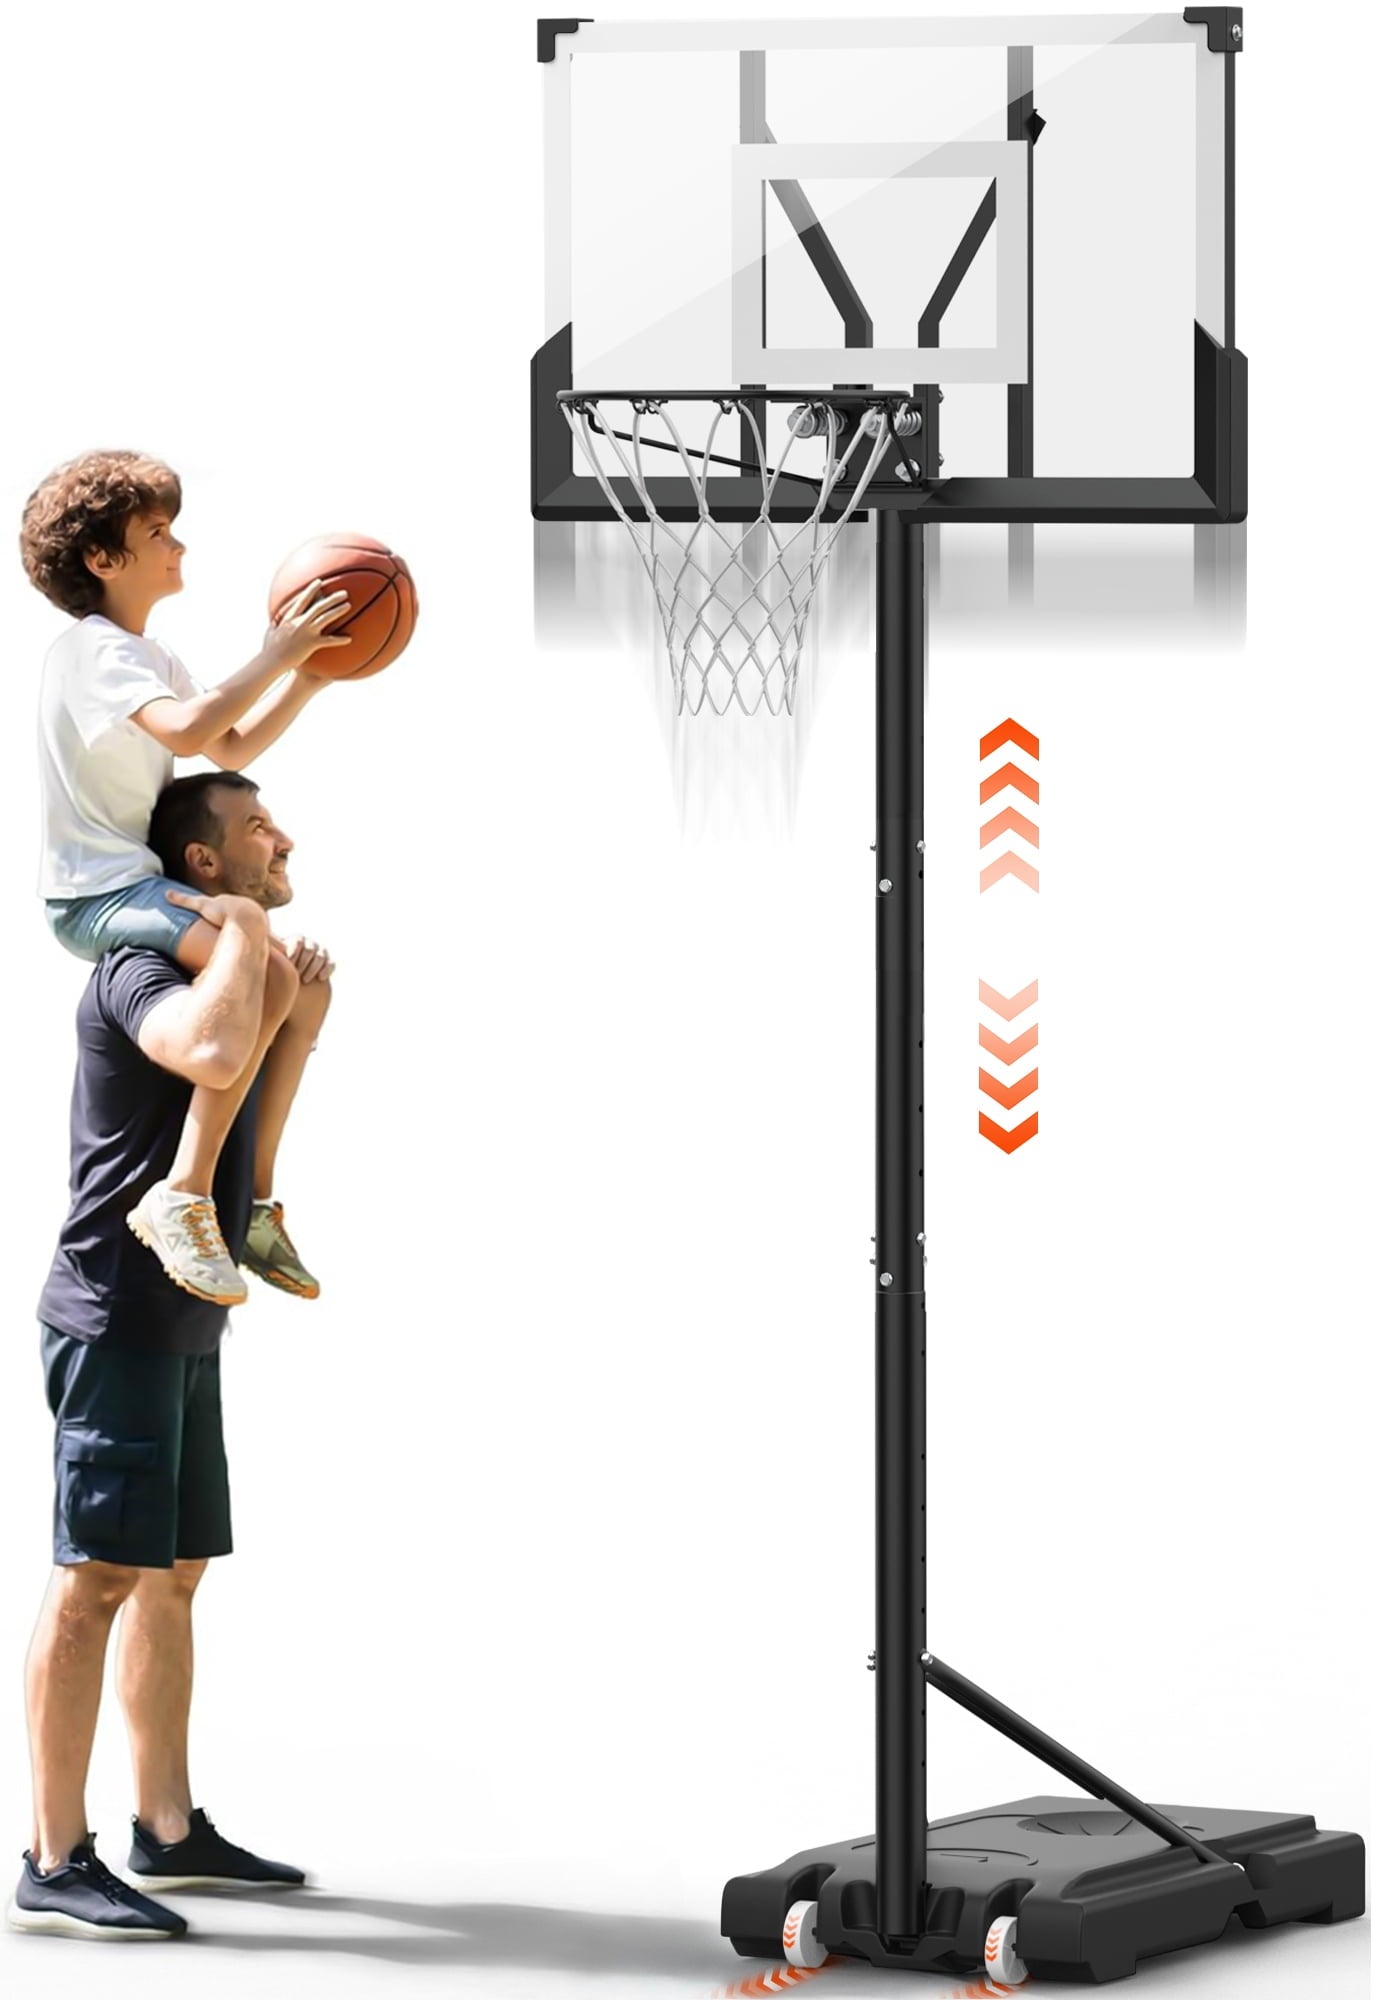 Qunler Portable Basketball System Hoop Goal System Height Adjustable 4.4ft - 10ft for Kids Adults Indoor Outdoor